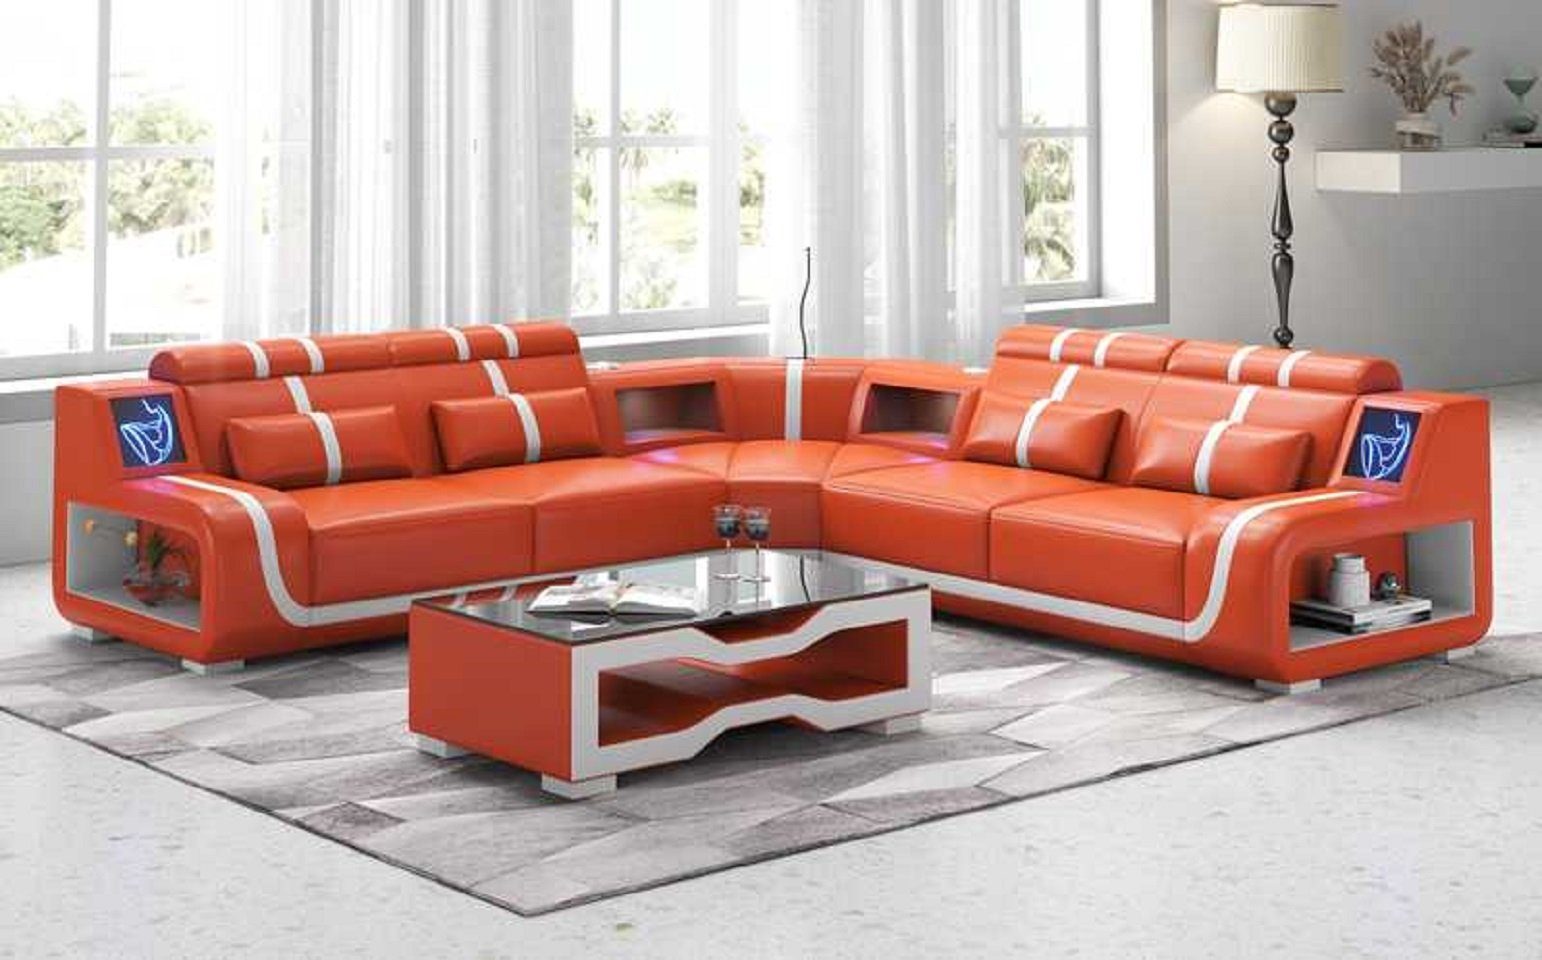 Ecksofa Ecksofa Teile, 3 Made Couch Europe JVmoebel in Luxus Form L couchen Kunstleder Sofa Sofas, Modern Orange